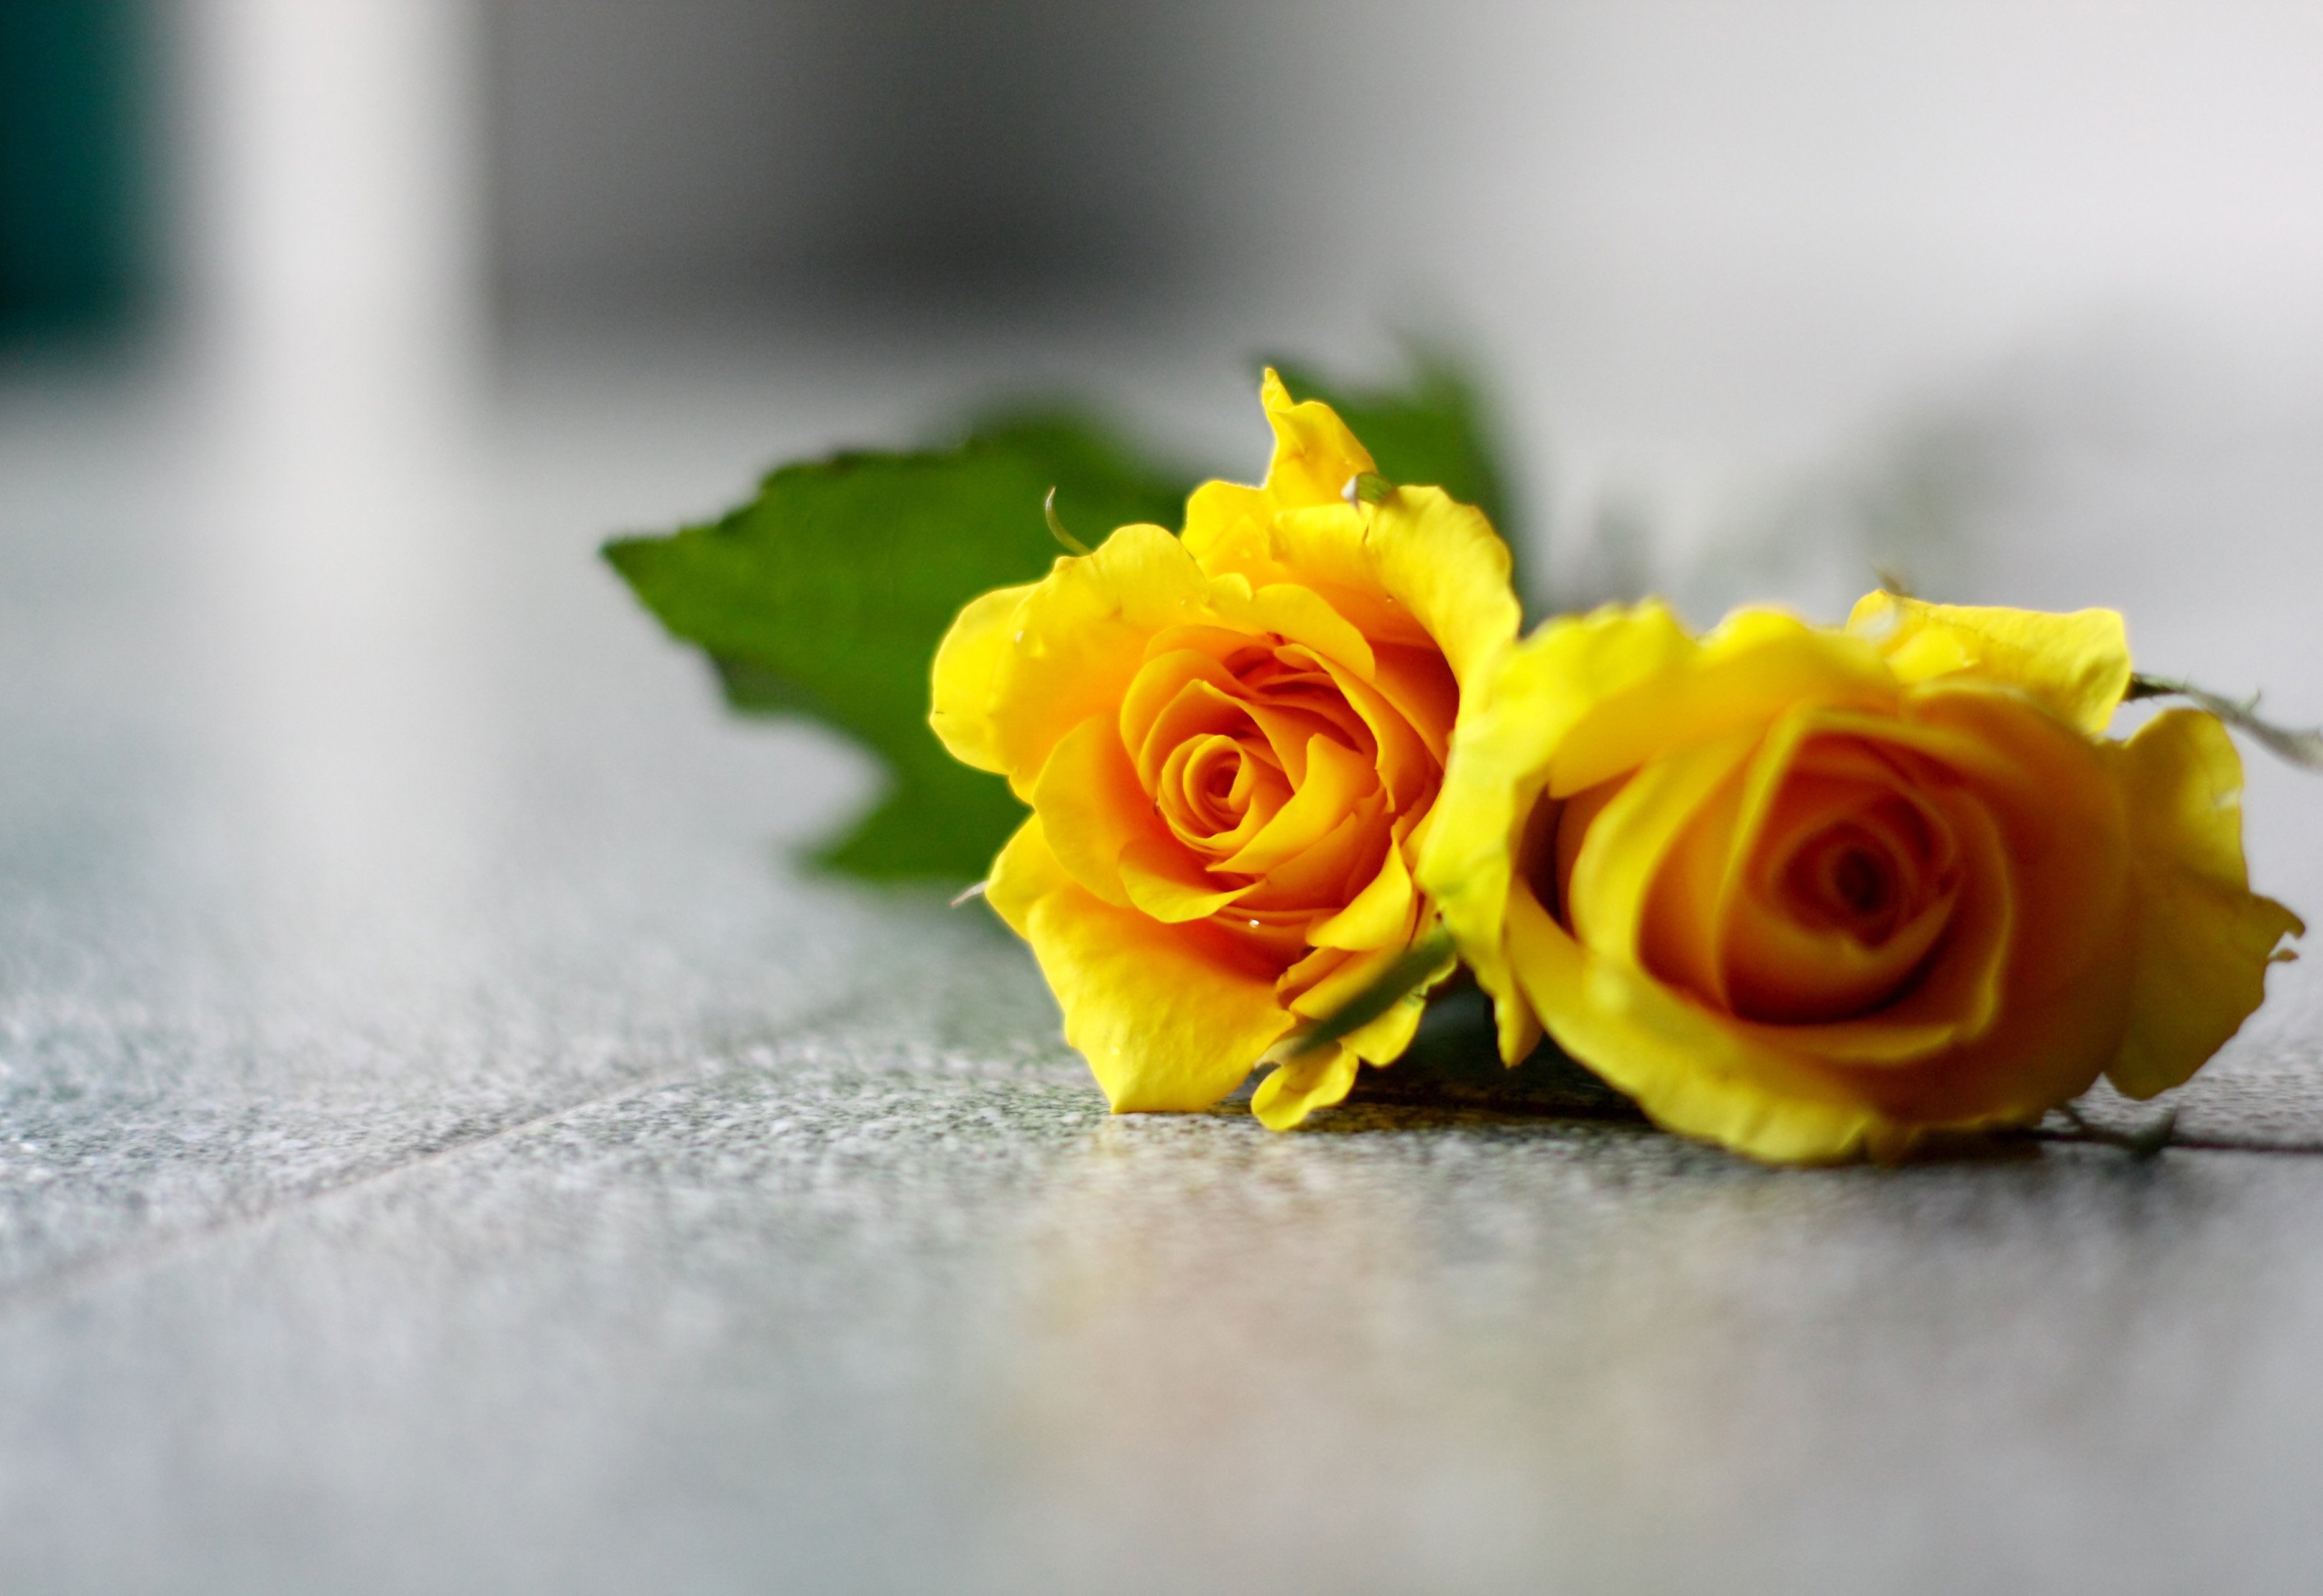 Цветы расстались. Желтые розы. Цветы лежат. Цветы лежат на столе.